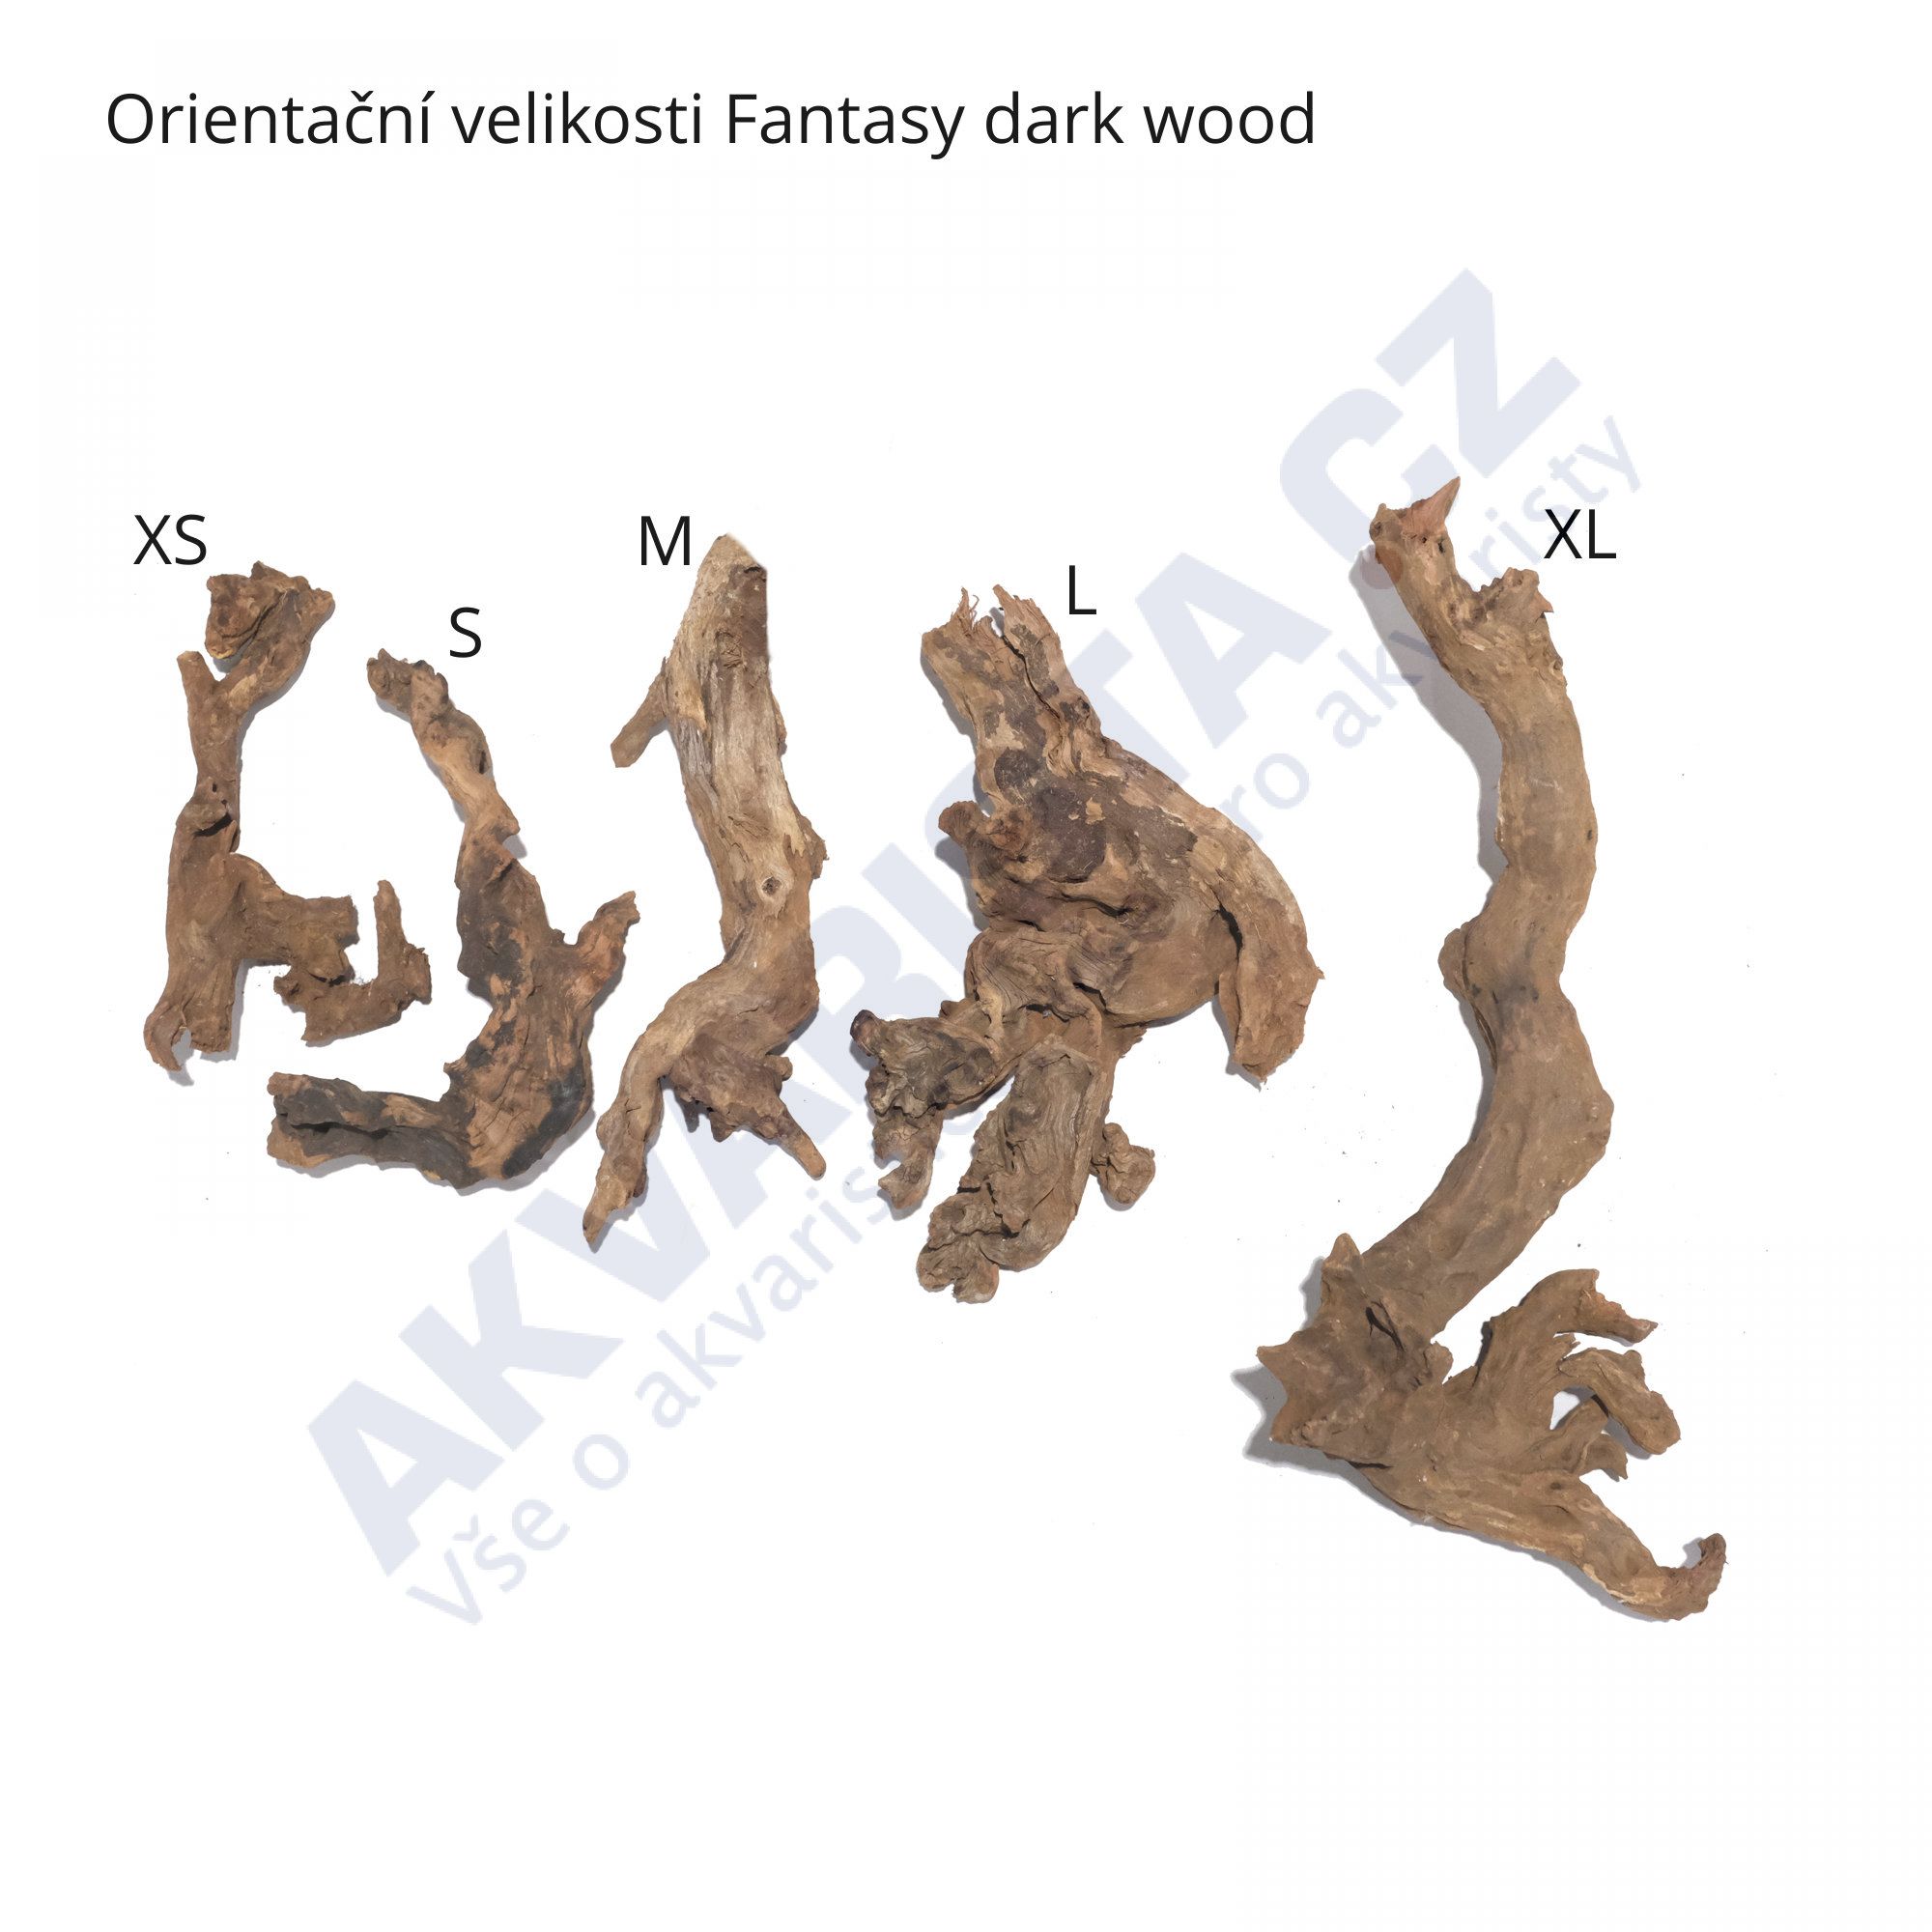 Fantasy dark wood S